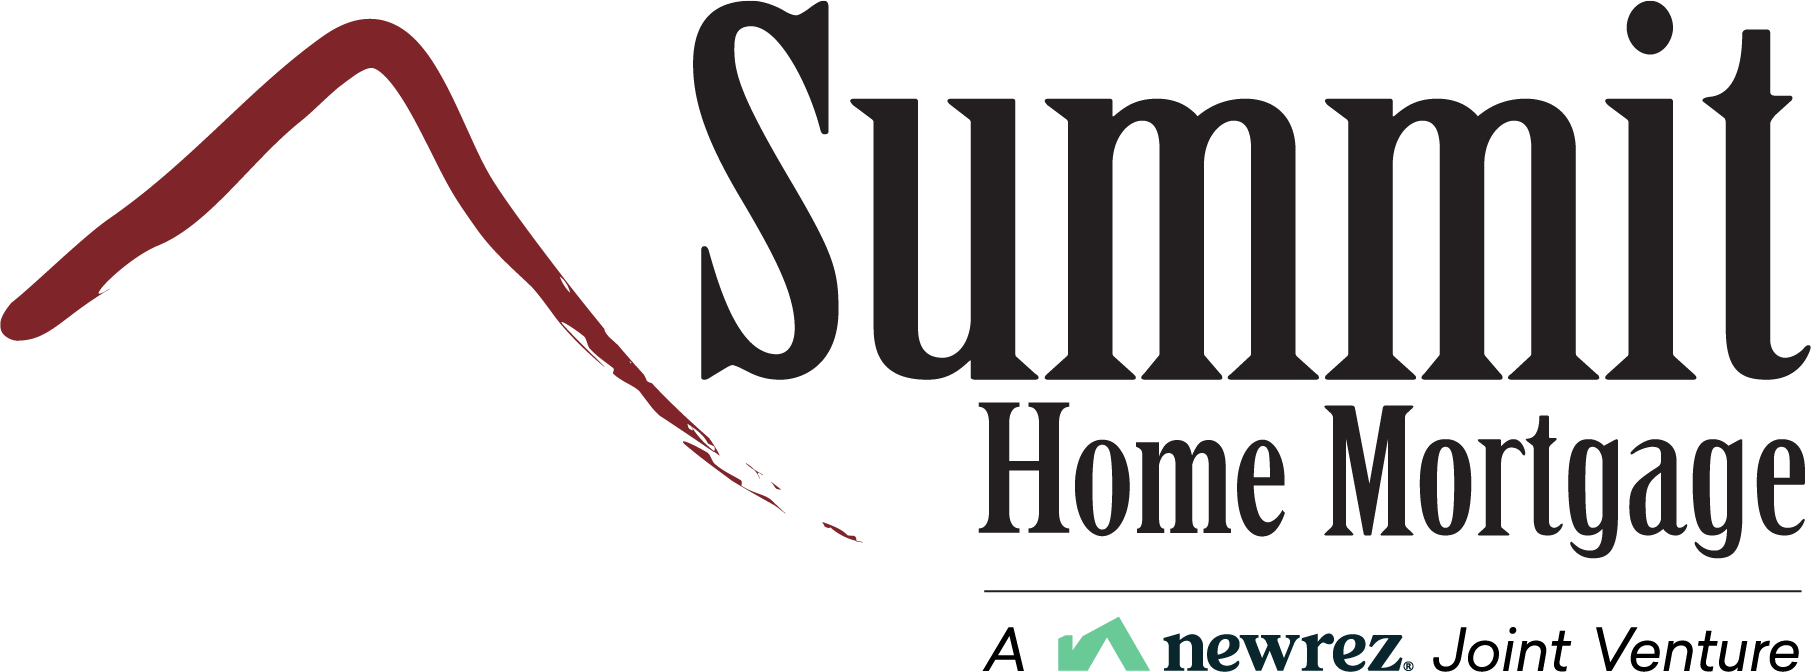 Summit Home Mortgage logo